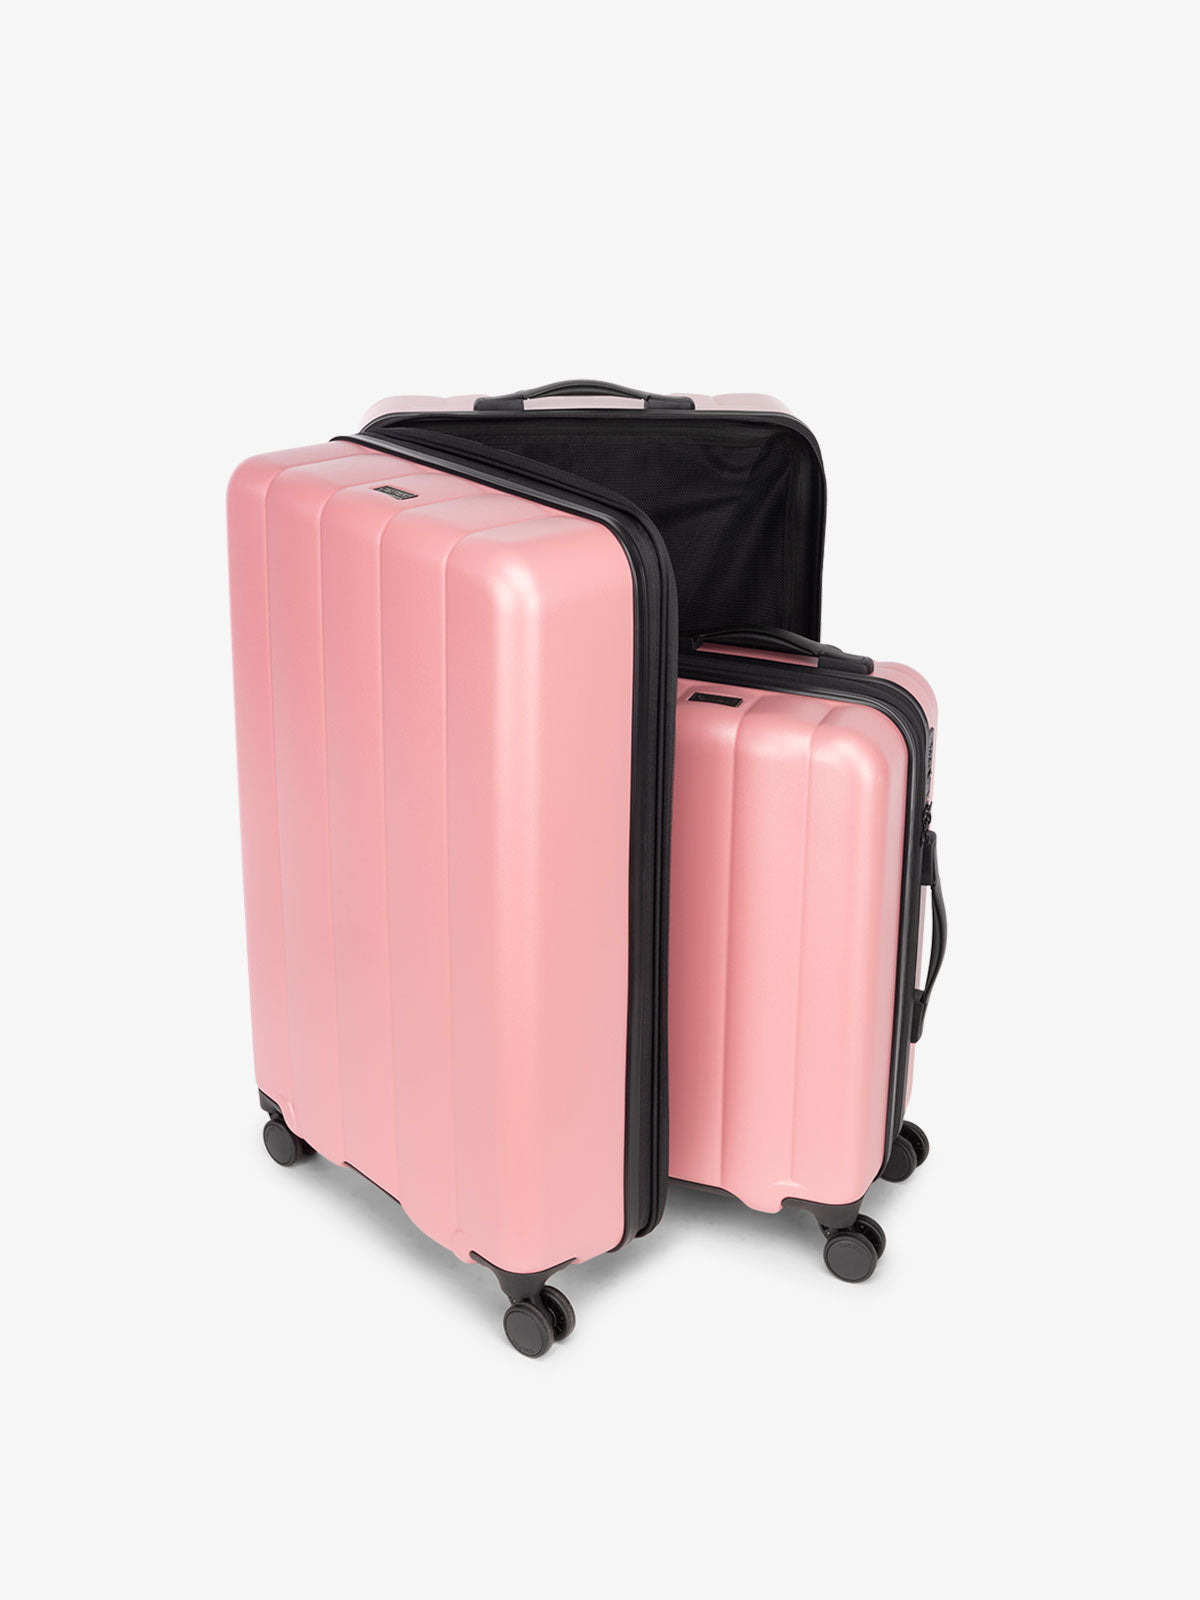 CALPAK Starter Bundle 2 piece hard side luggage set with 360 spinner wheels in rose